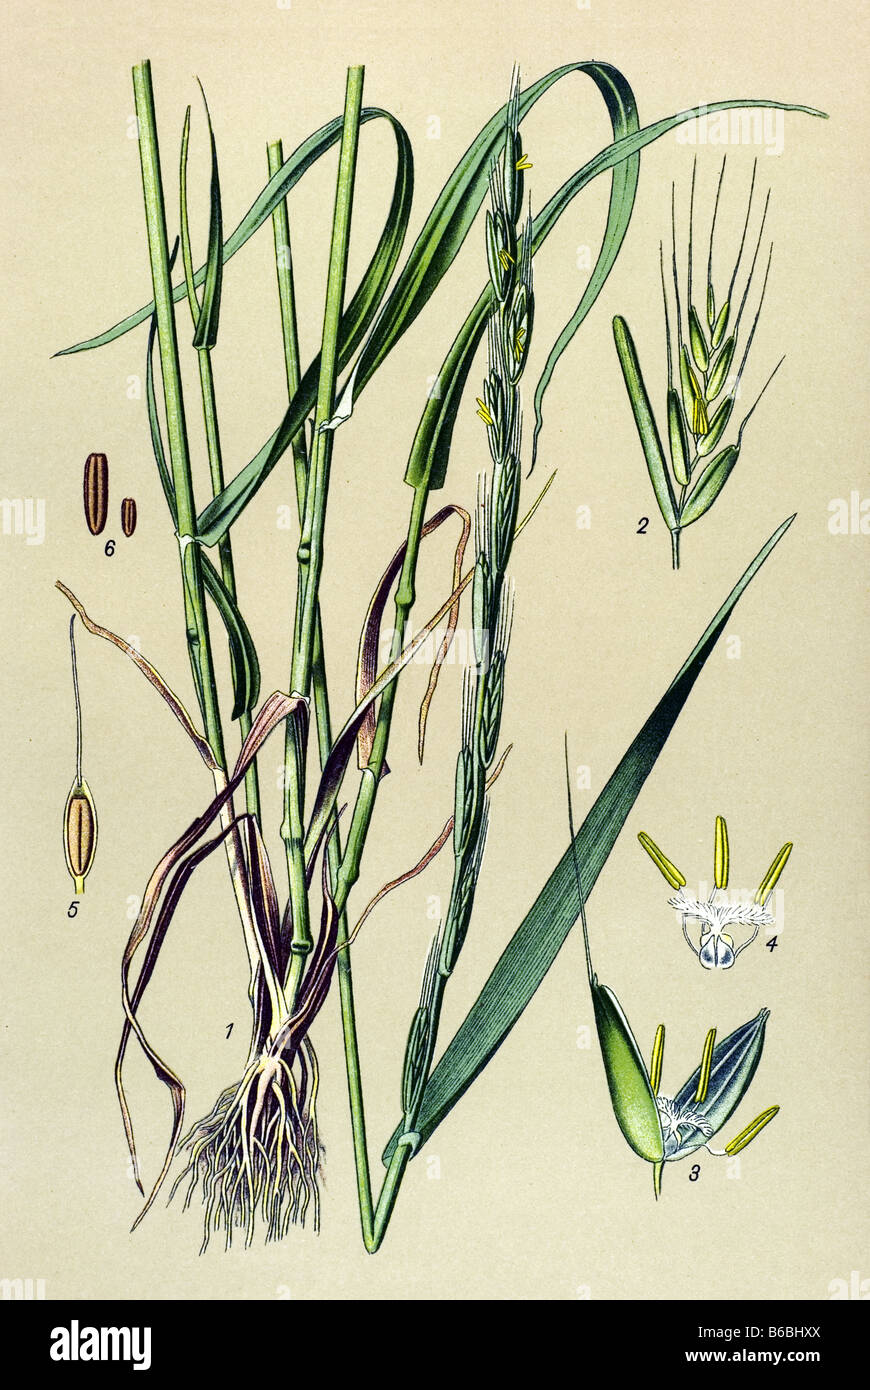 Darnel, Lolium temulentum, poisonous plants illustrations Stock Photo